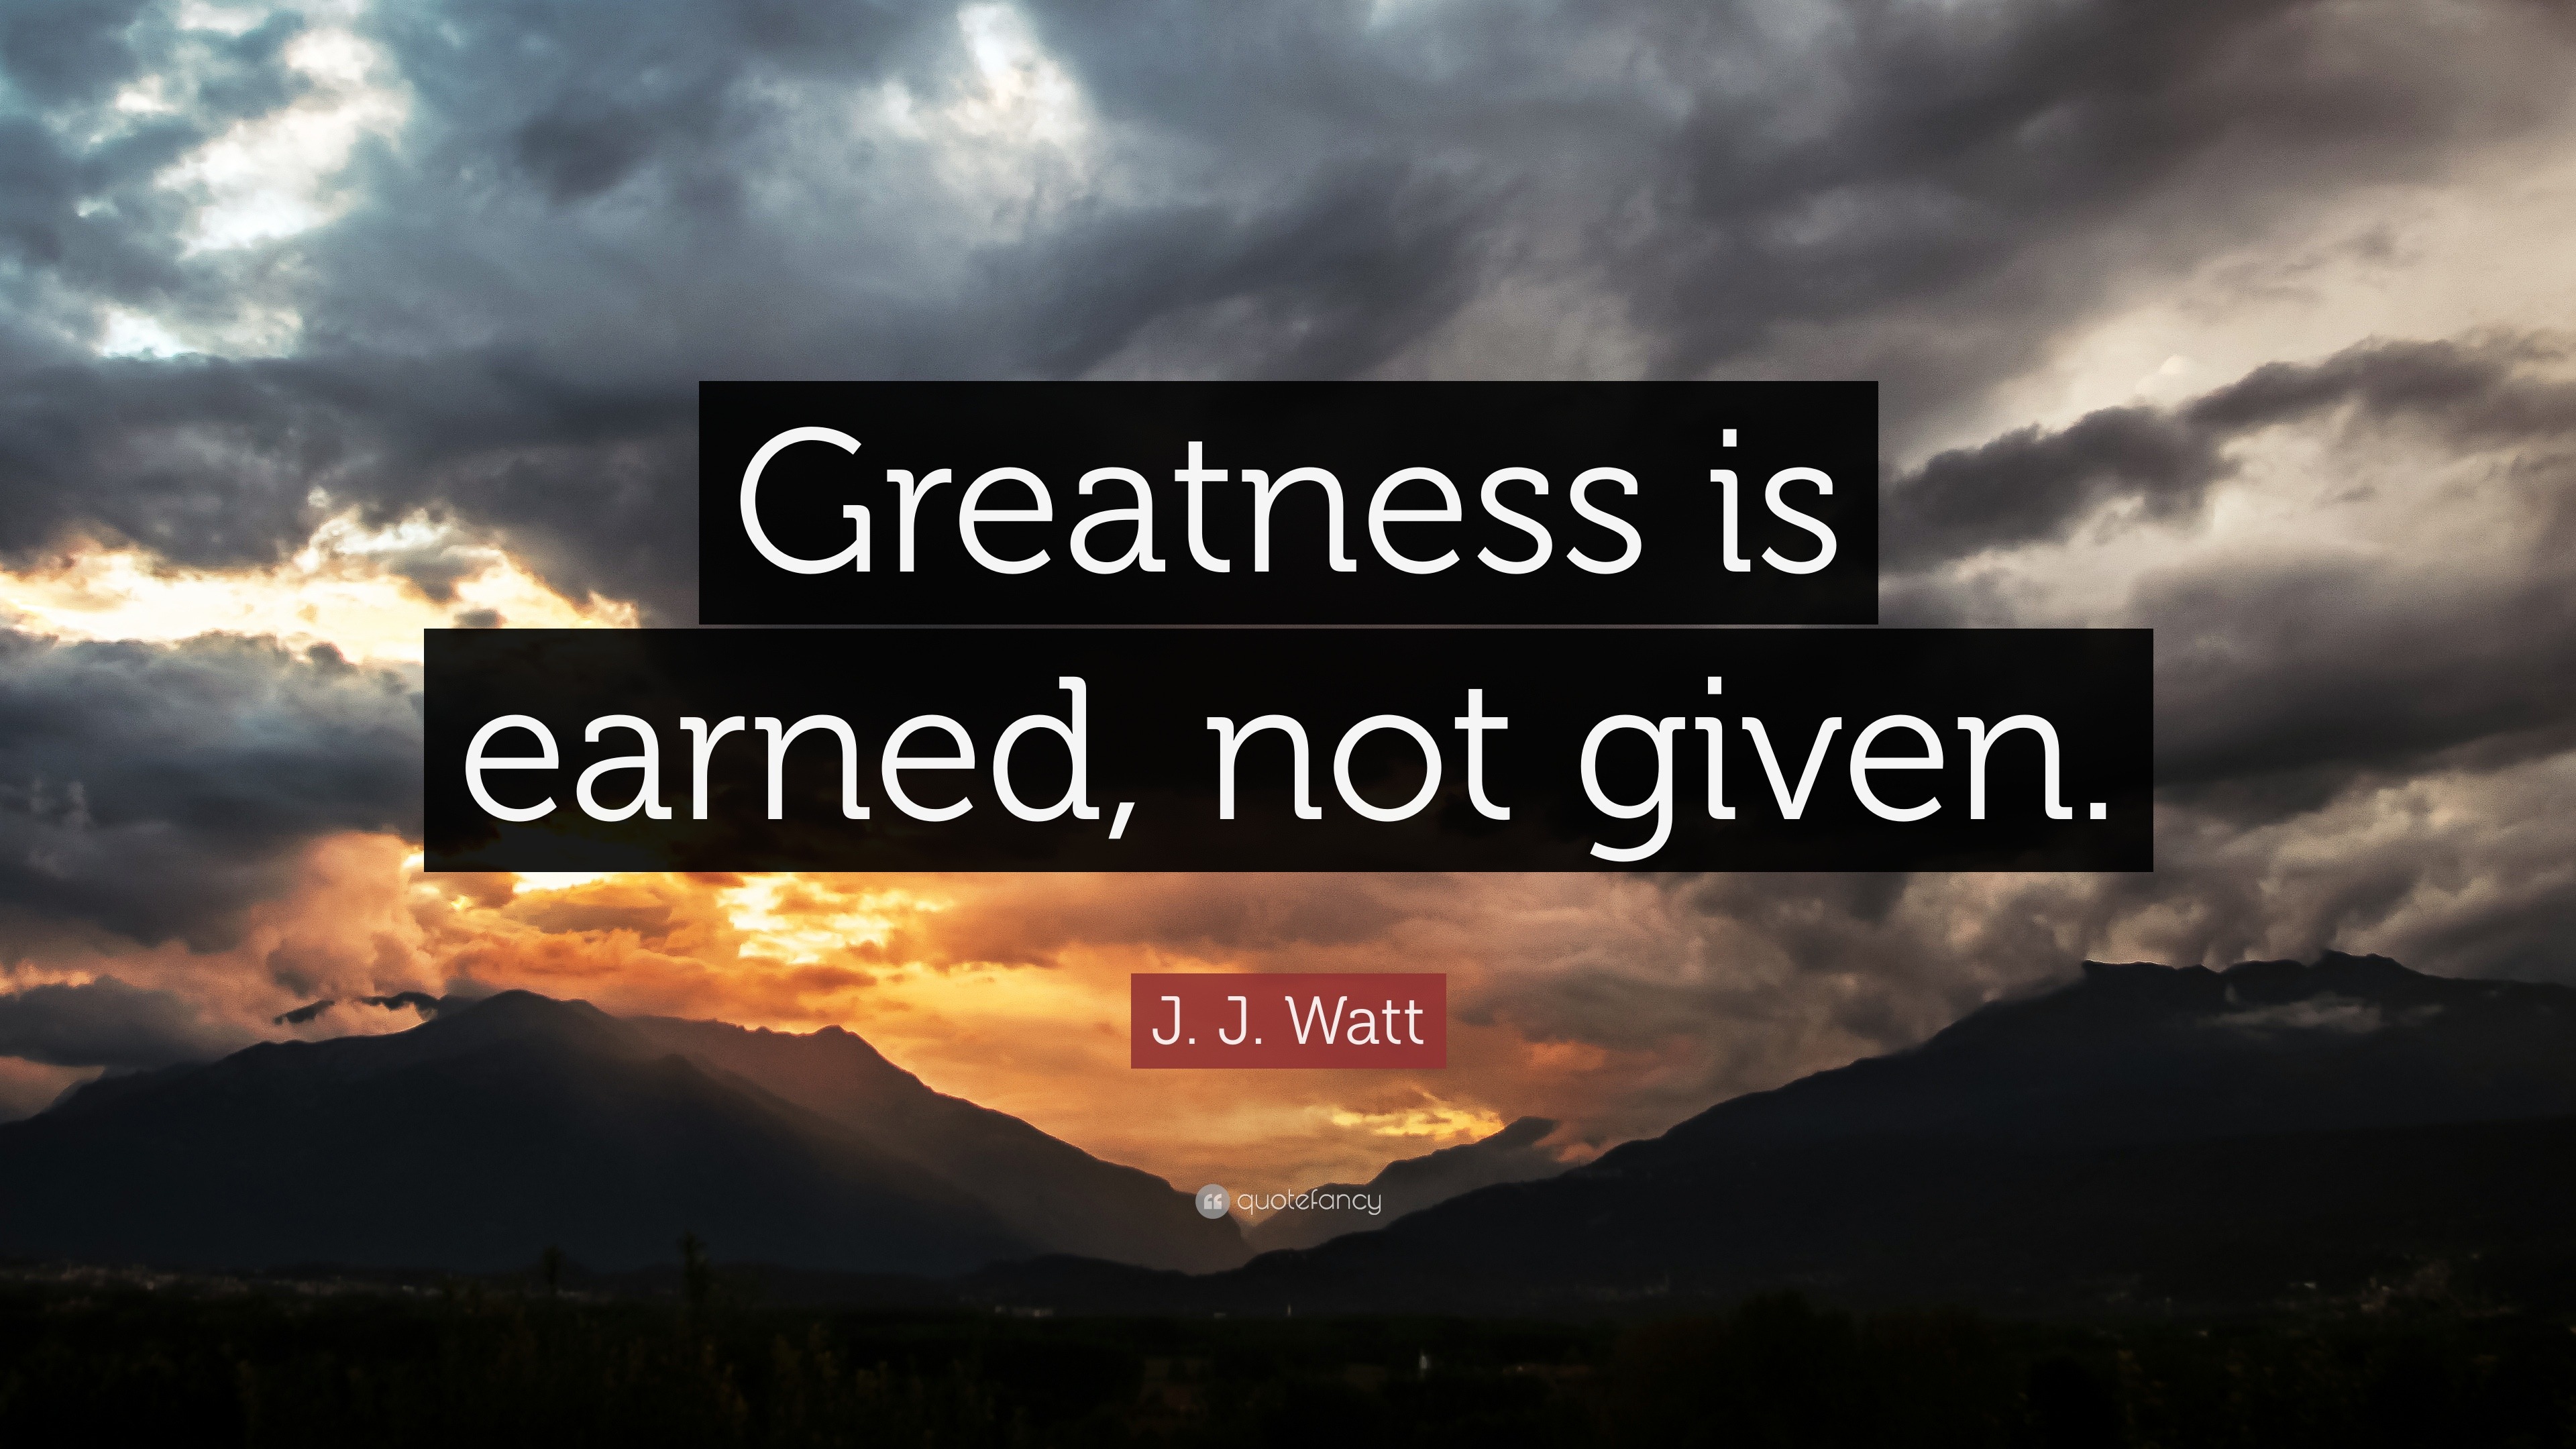 J. Watt Quote: “Greatness is earned, not given.”